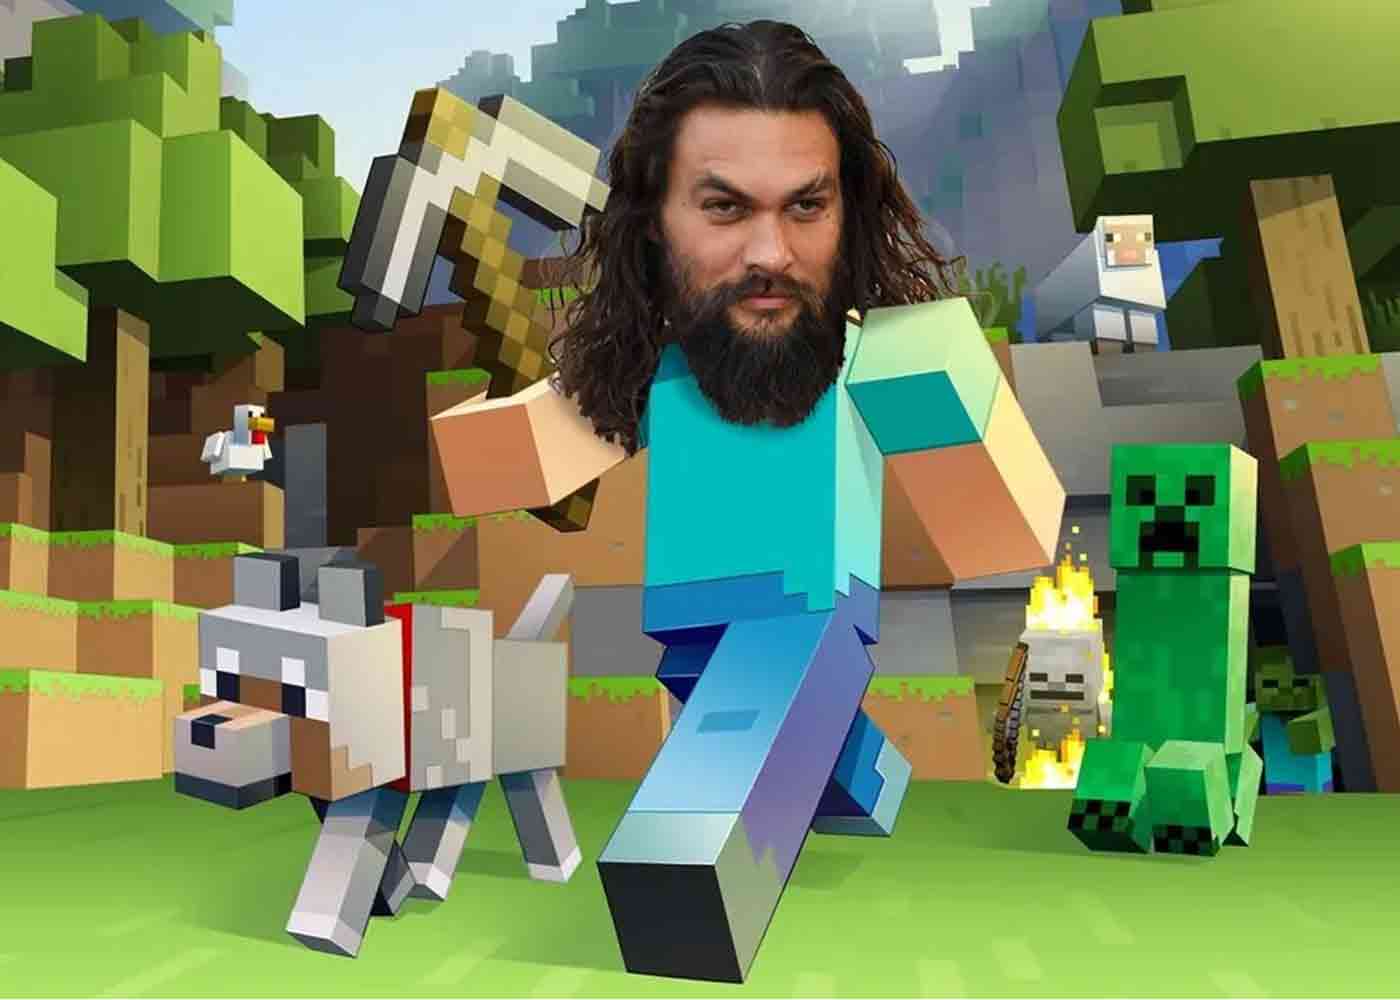 Simak bocoran foto dari Minecraft Live Action Movie!